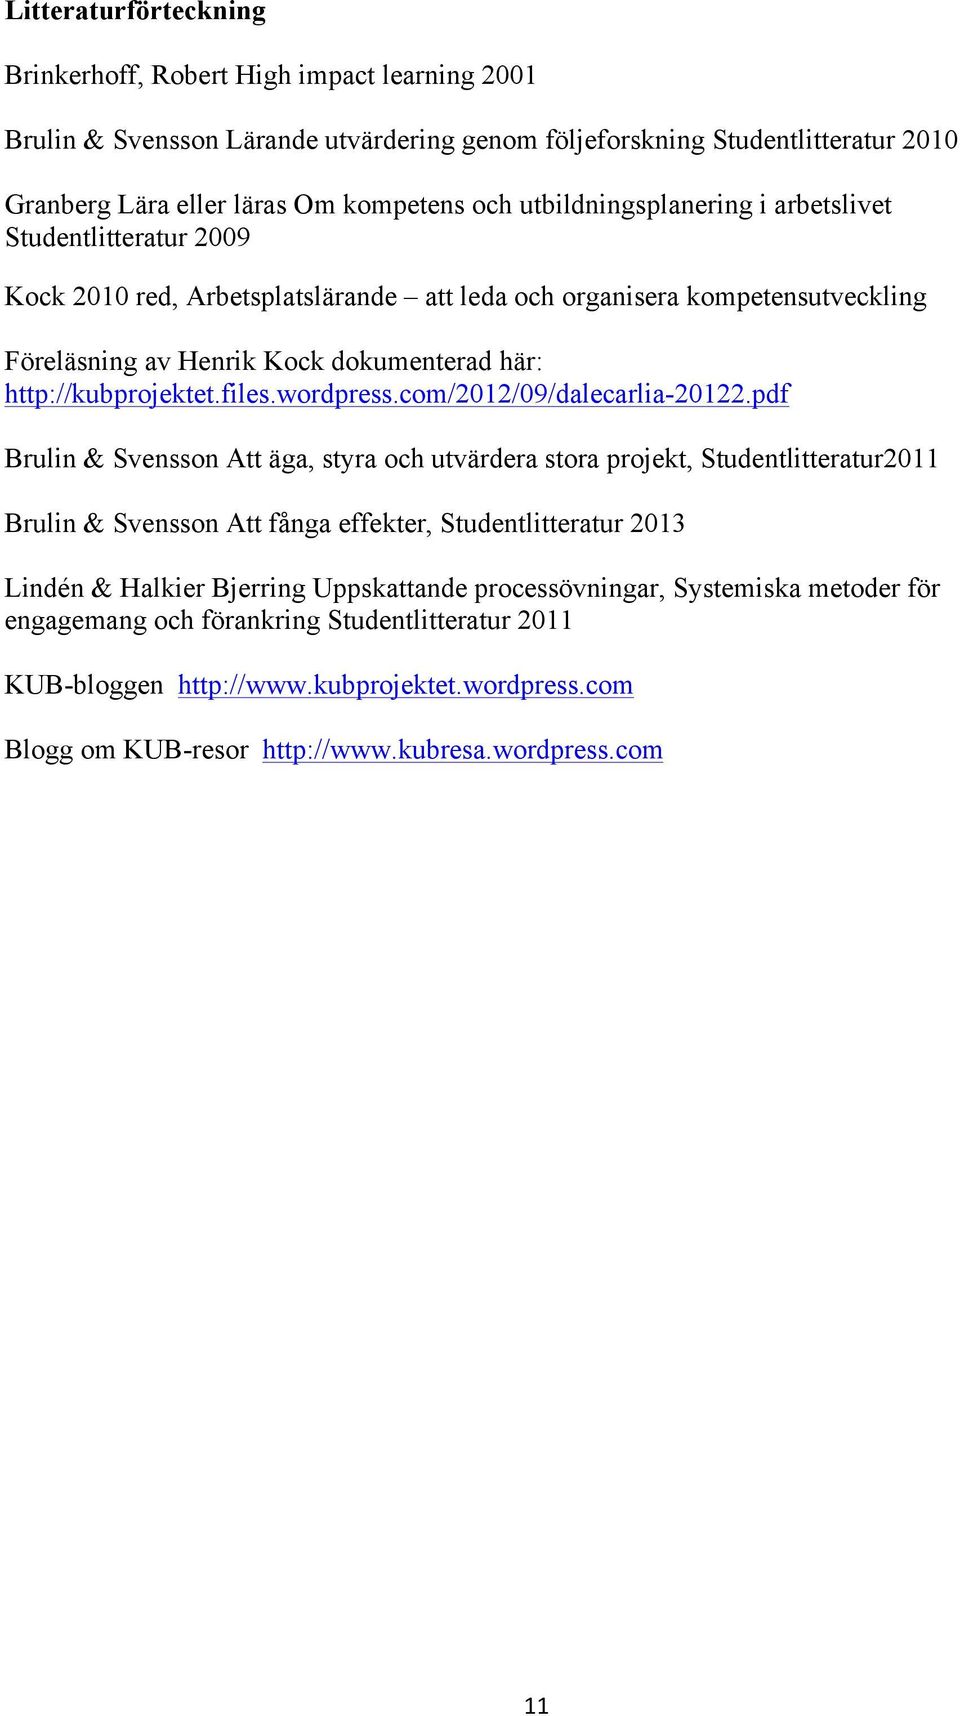 http://kubprojektet.files.wordpress.com/2012/09/dalecarlia-20122.